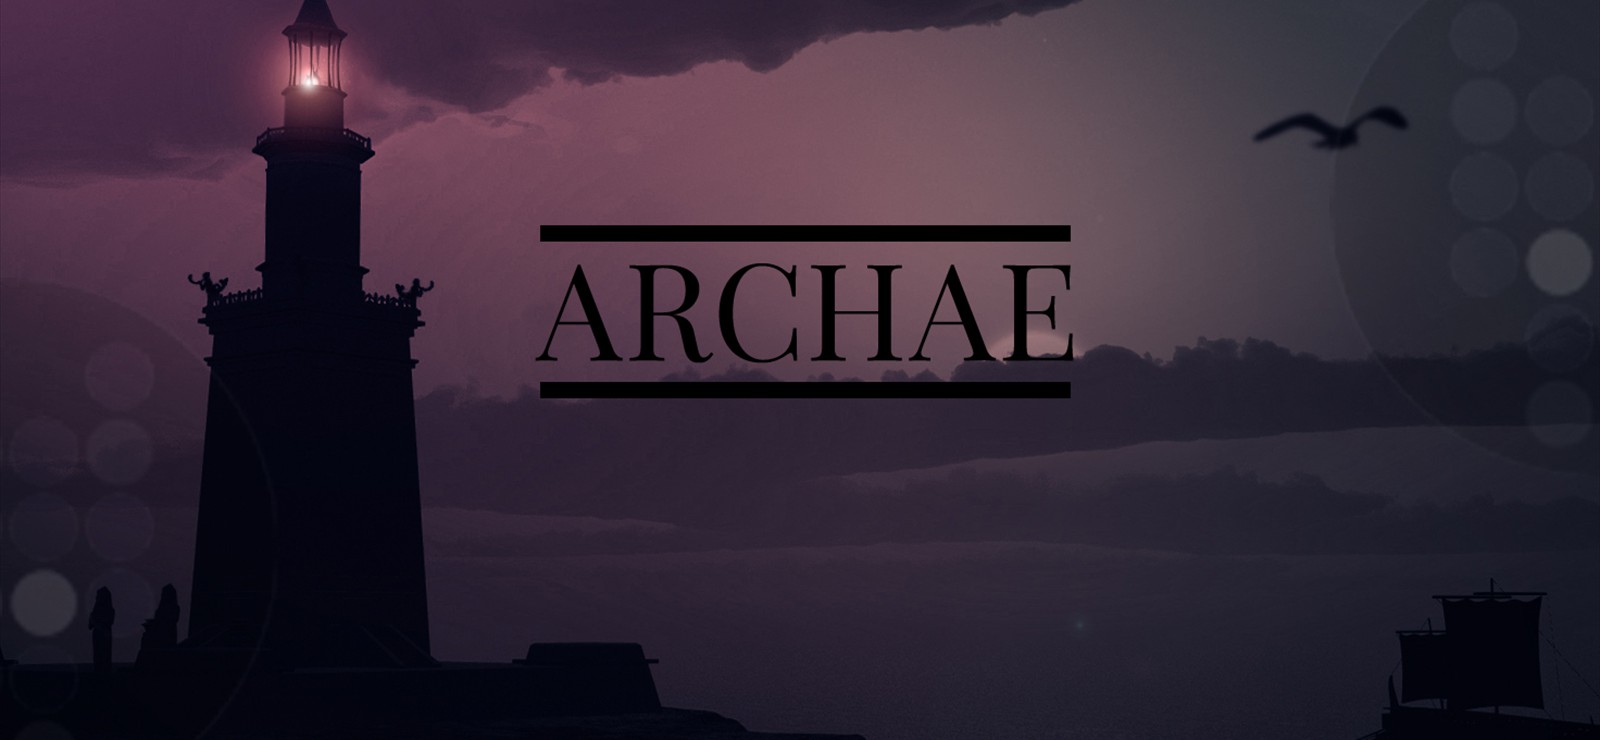 archae_pharos_night